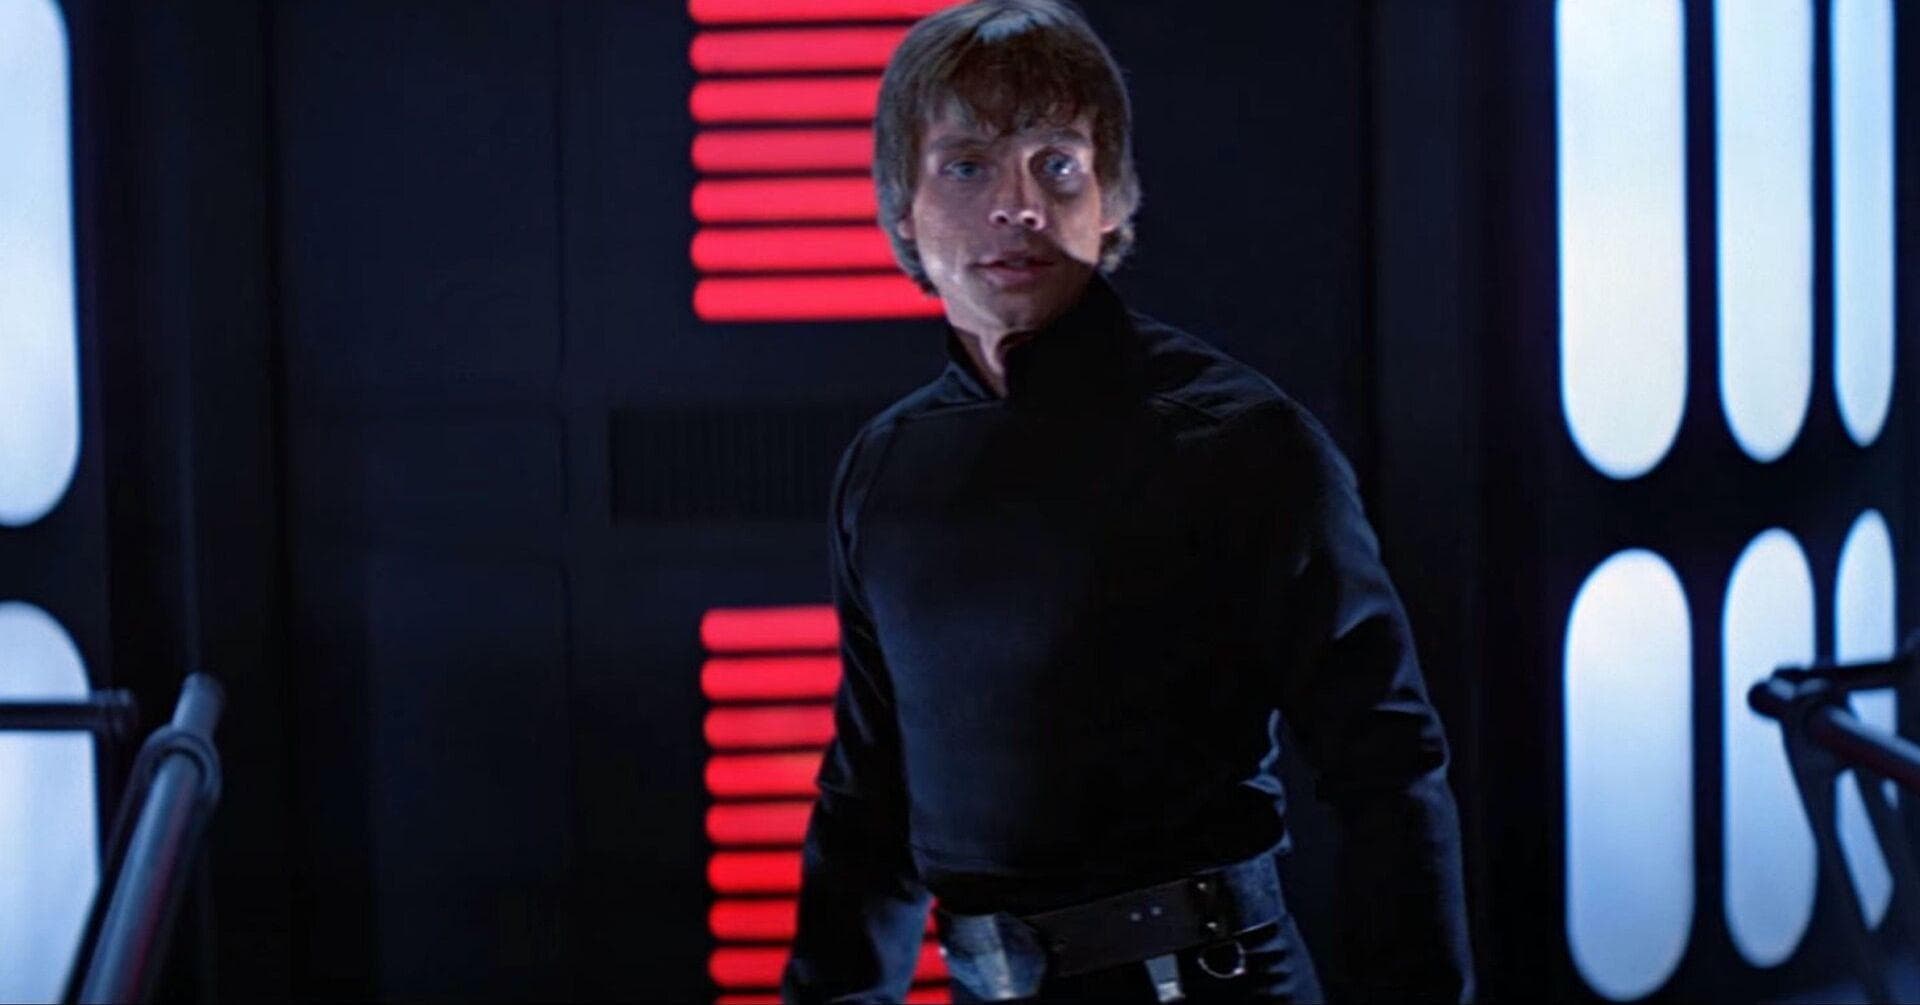 Star Wars Glassware Set of 3 Return Of The Jedi Empire Strikes Back 16 Oz  New